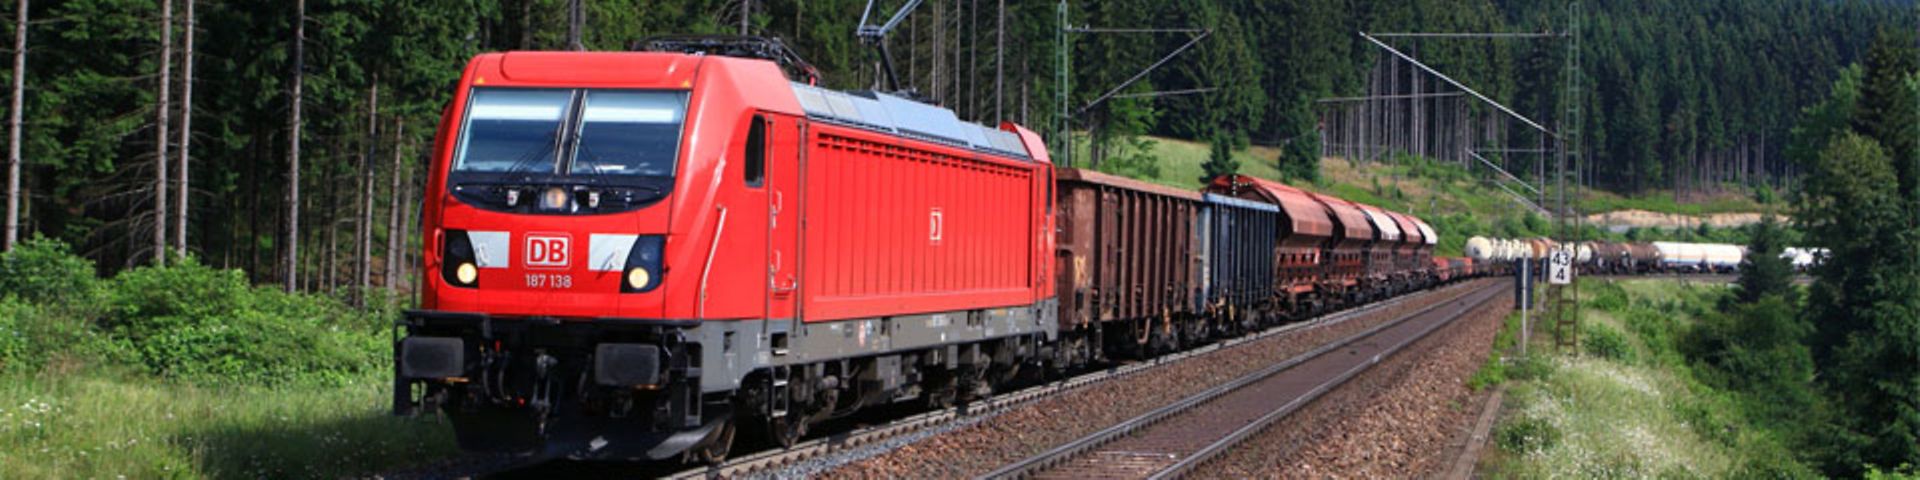 Langer DB Güterzug im Wald